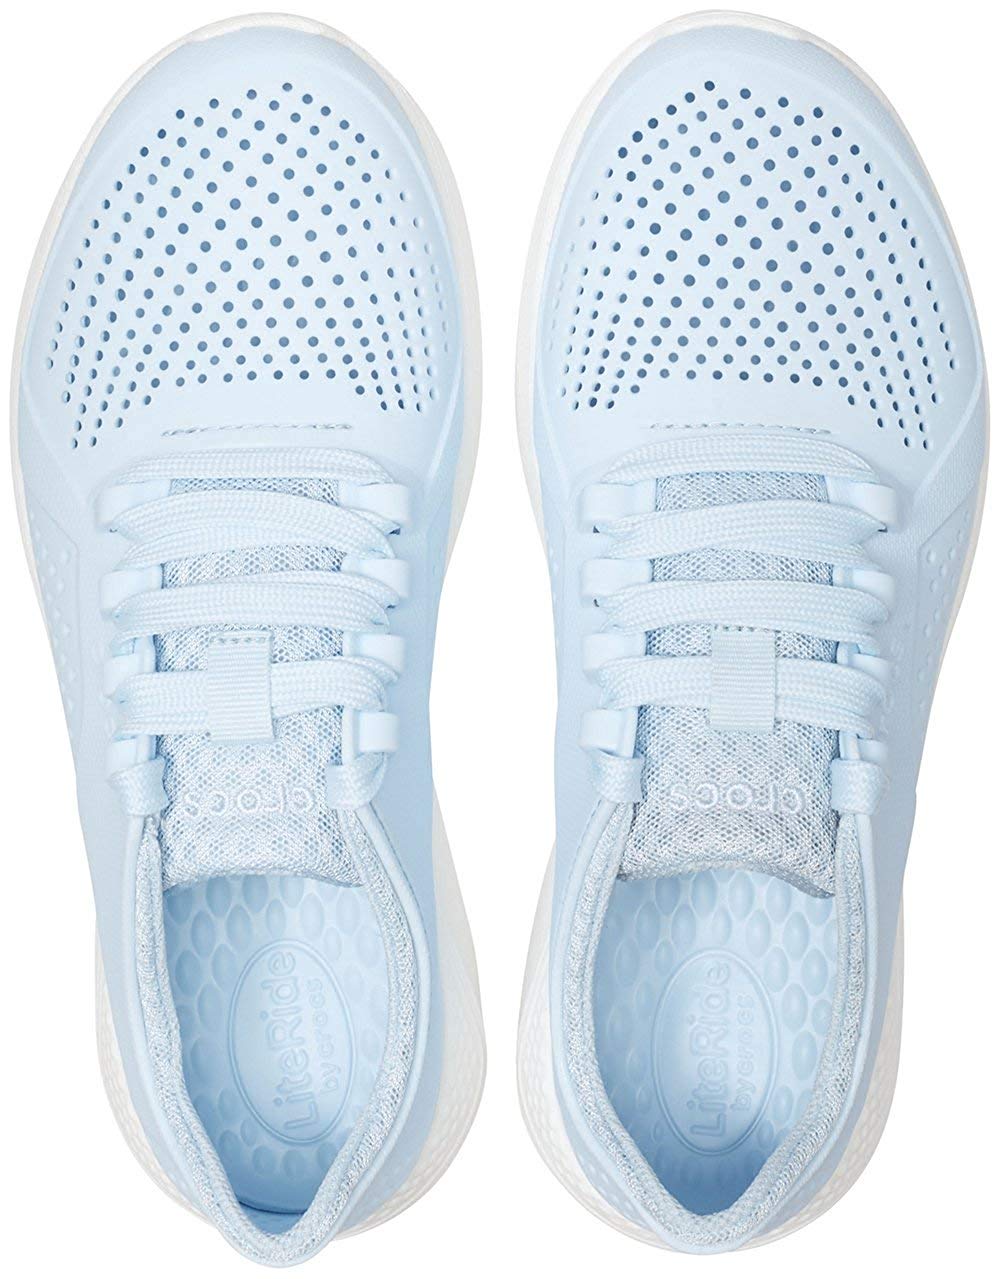 Crocs Women's LiteRide Pacer, Mineral Blue/White, Size 4.0 | eBay